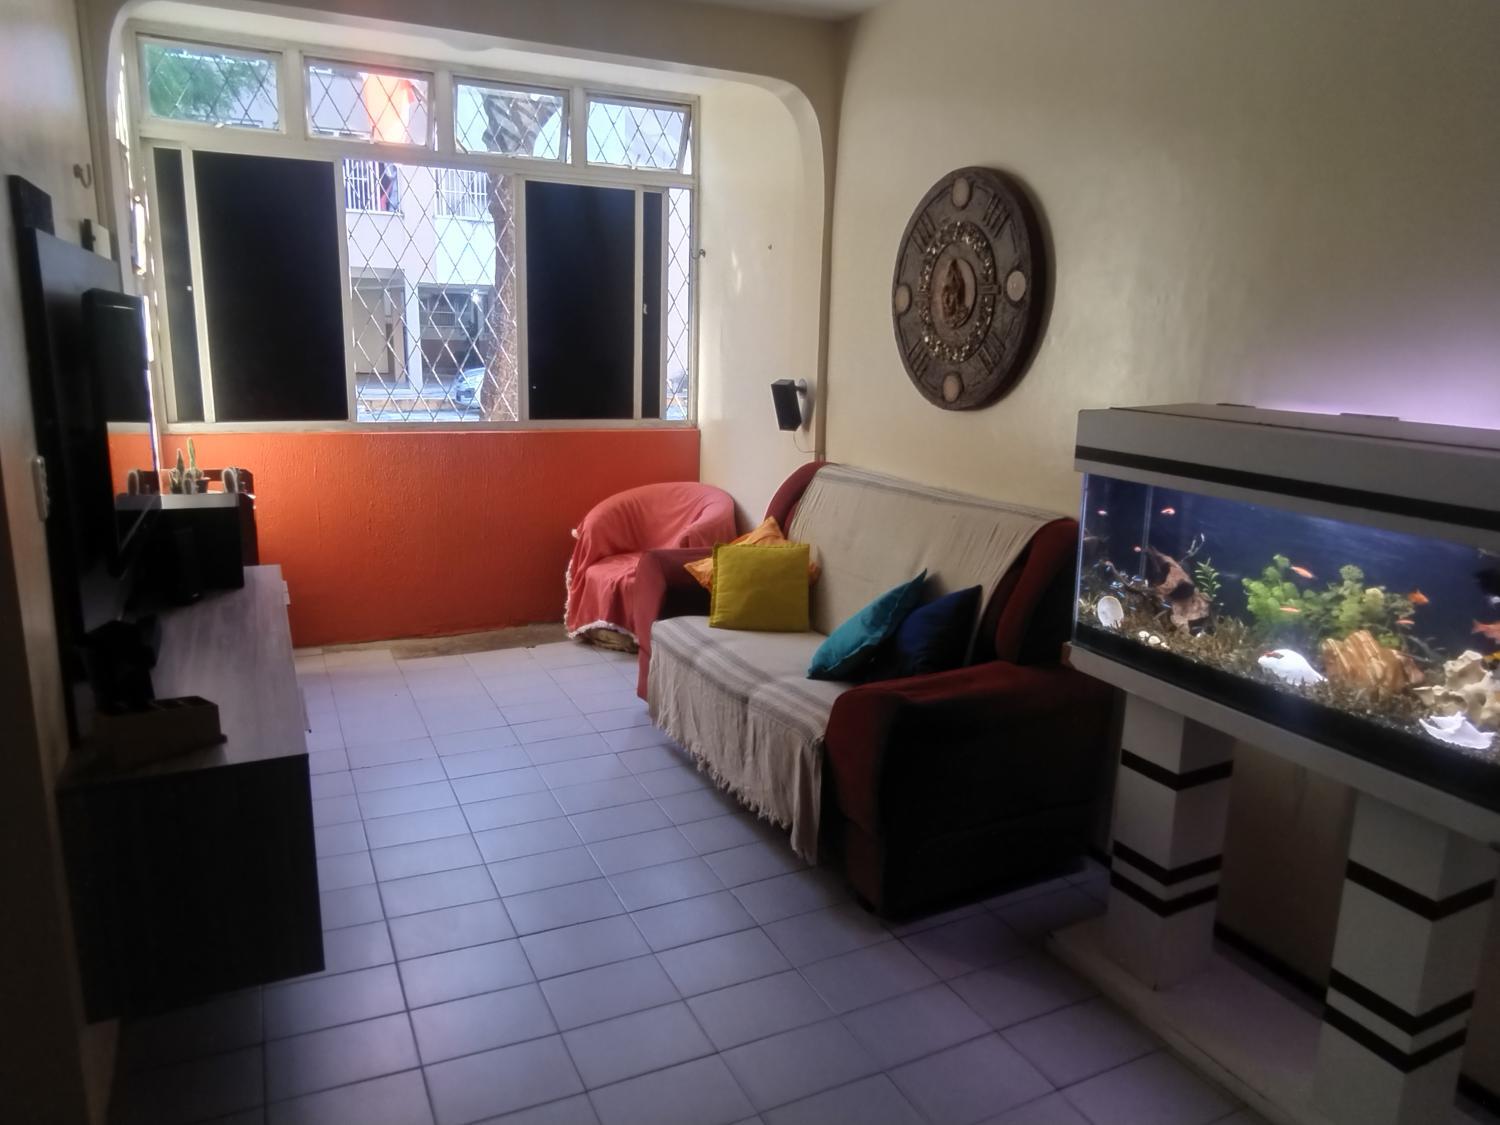 Others, apartamento em condominio residencial, Fortaleza